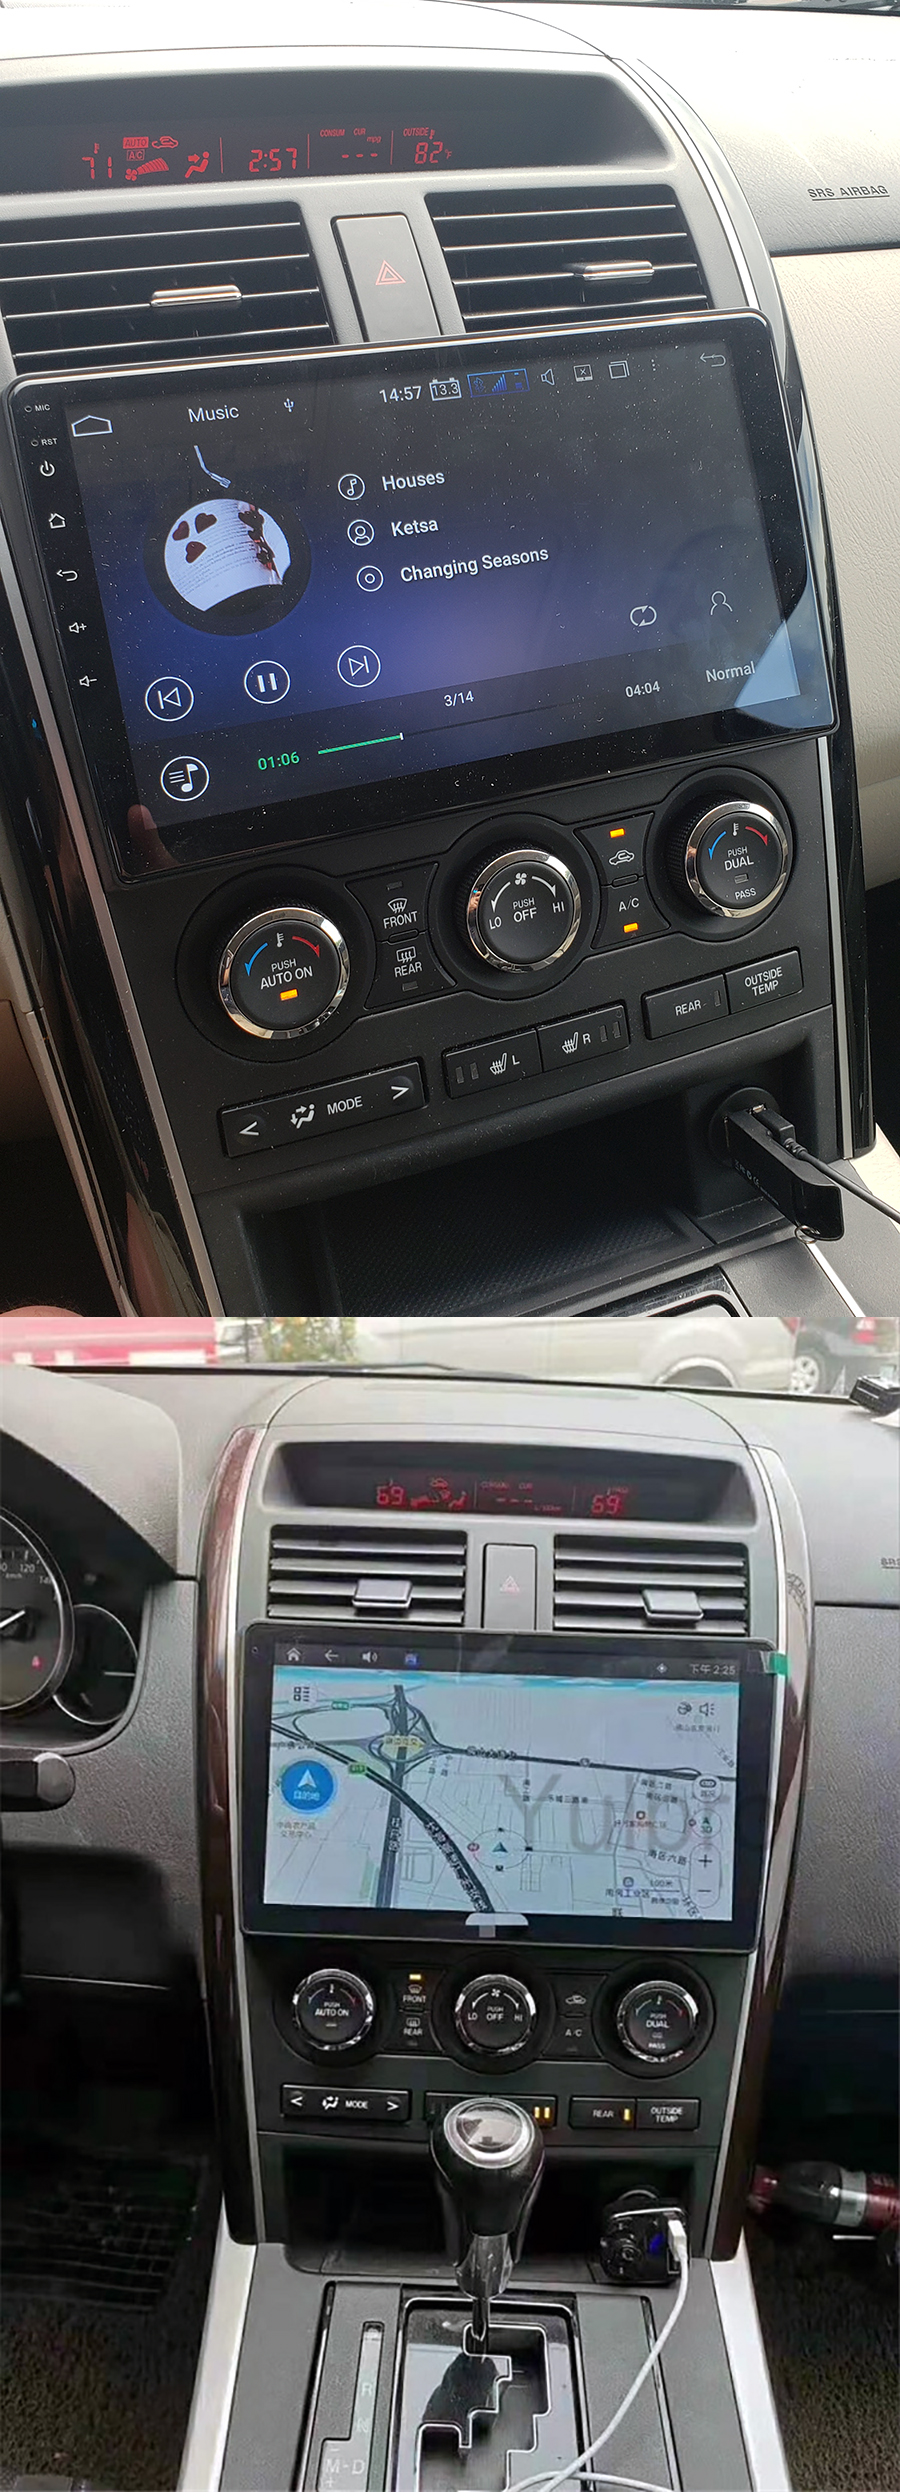 Mazda CX-9 2007-2013 Aftermarket Radio Upgrade